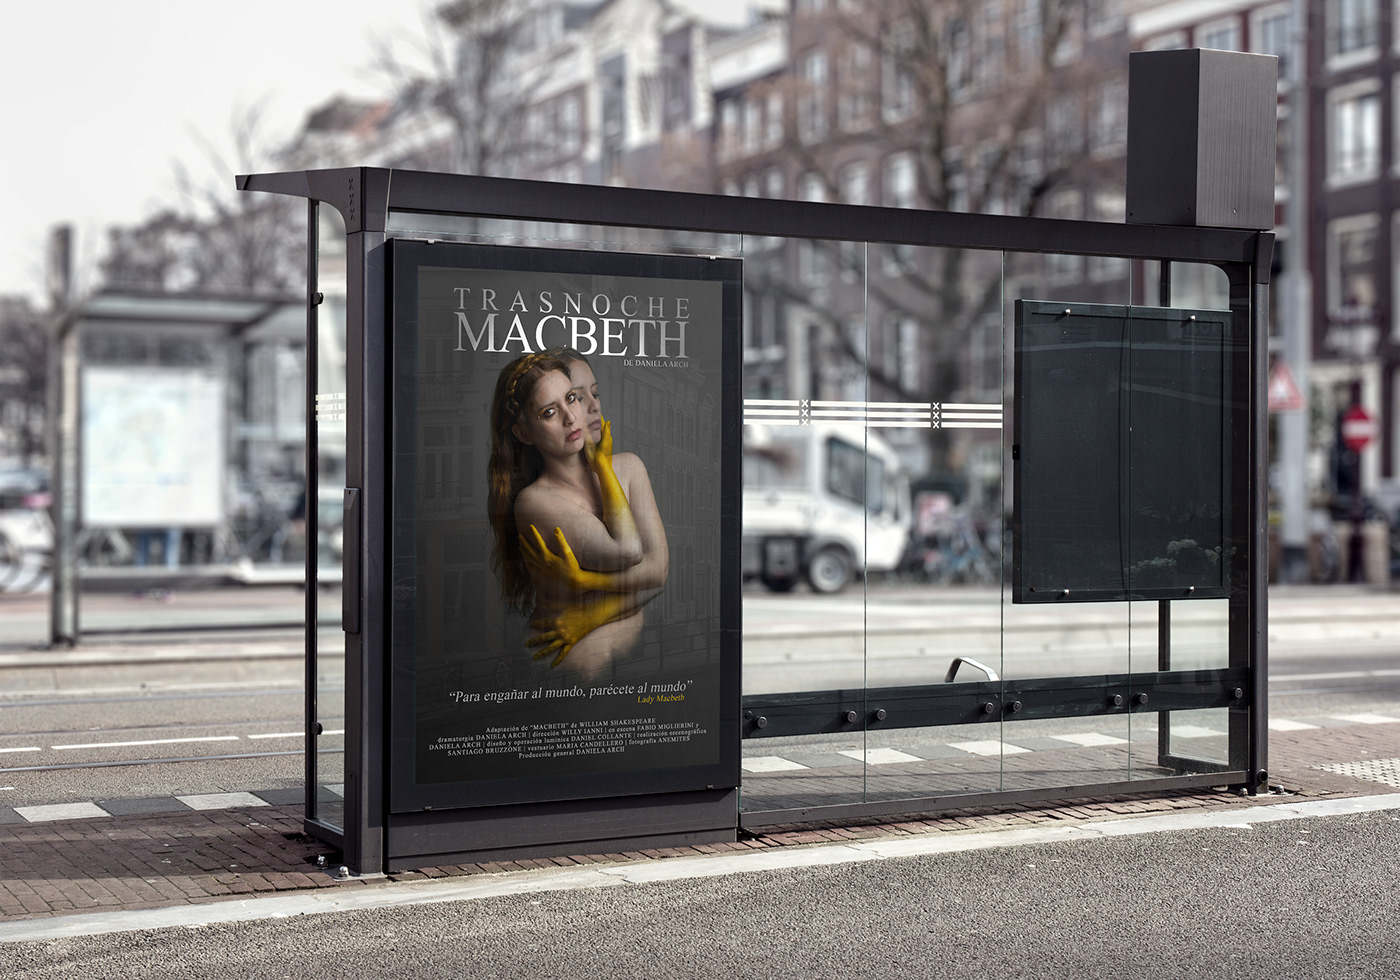 Macbeth trasnoche macbeth FINEART anemites cordoba obra de teatro poster art poster art